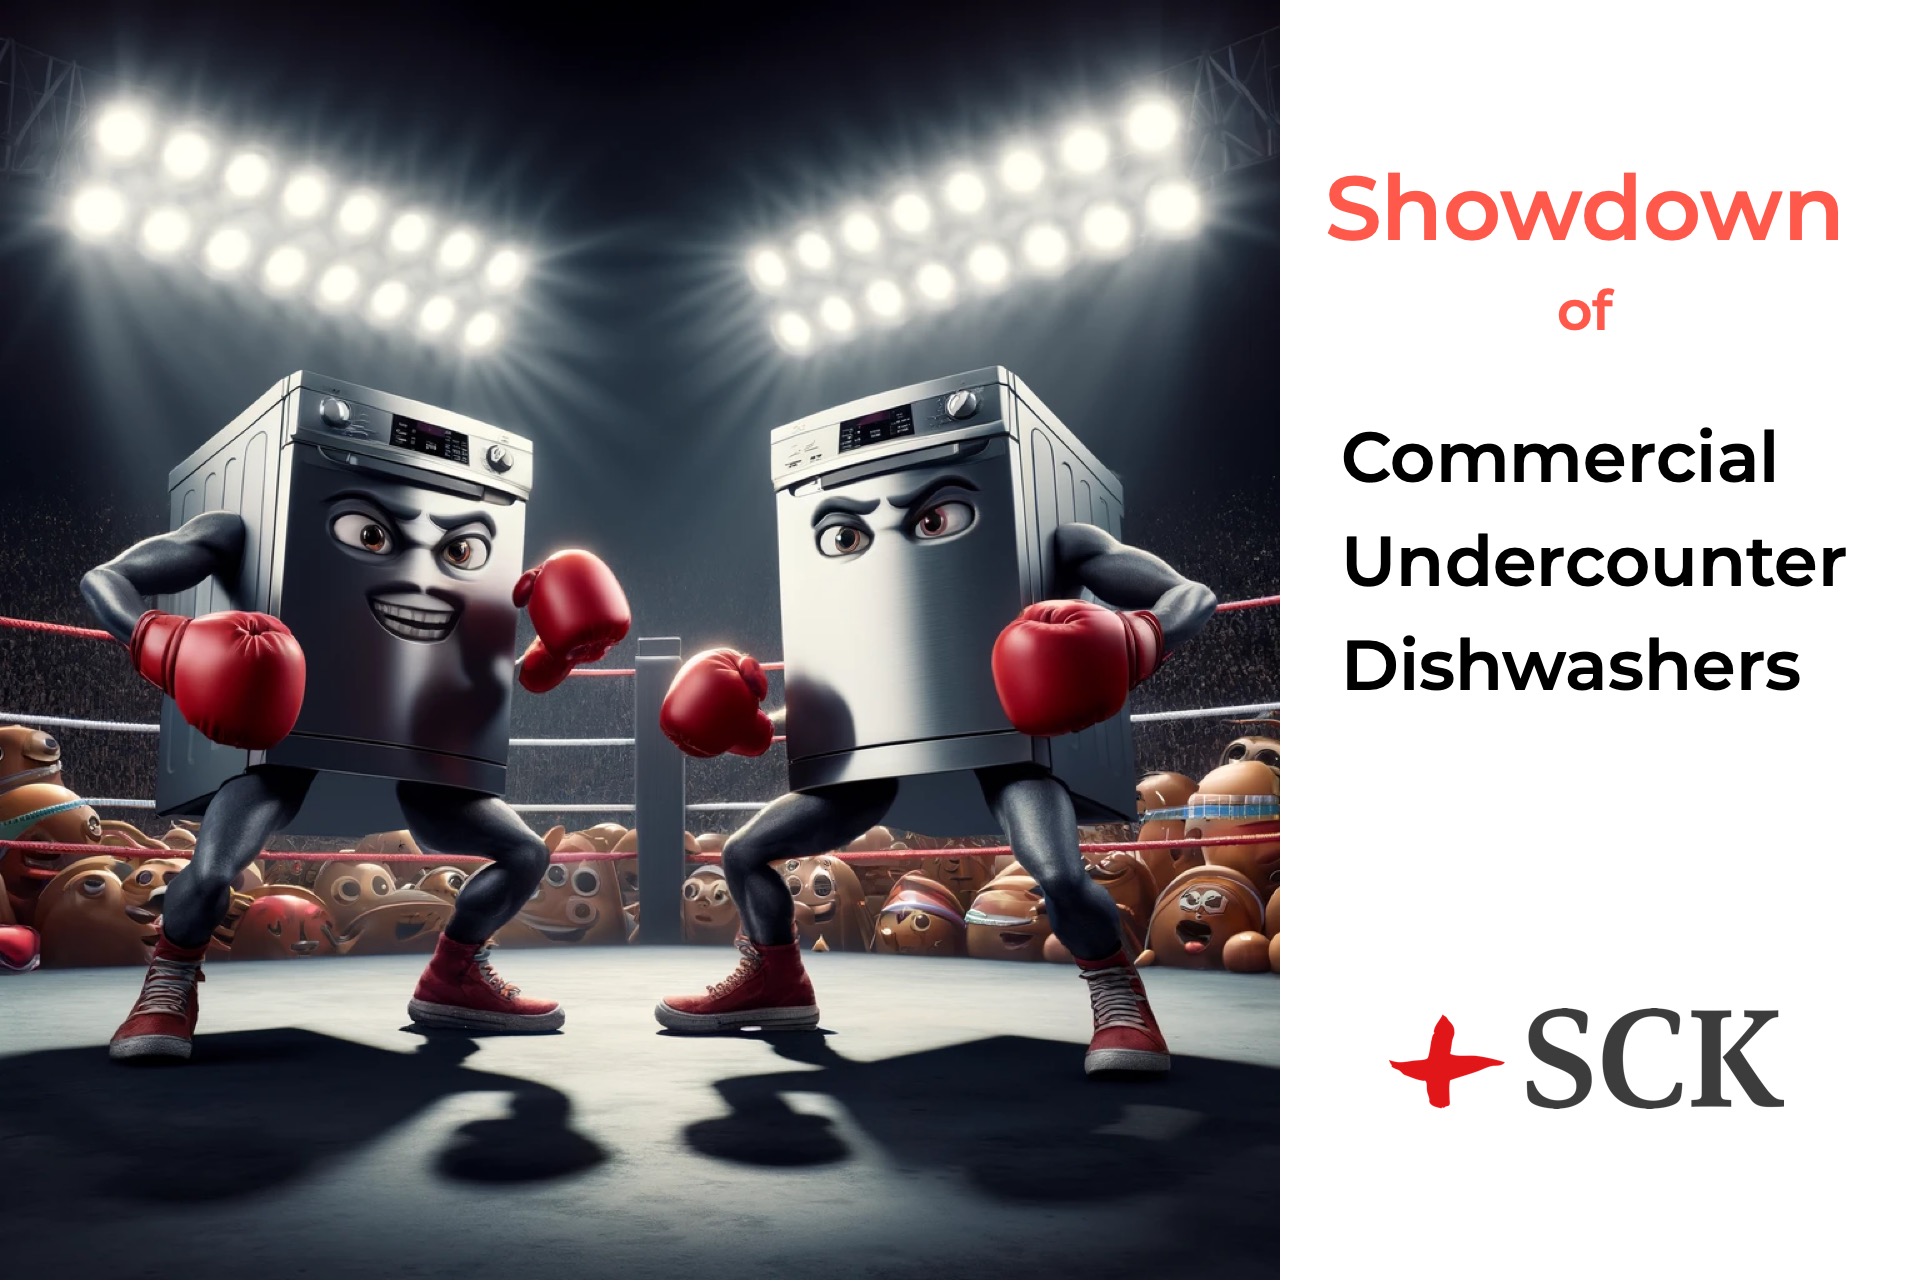 Showdown between 3 brands of Commercial Undercounter Dishwashers